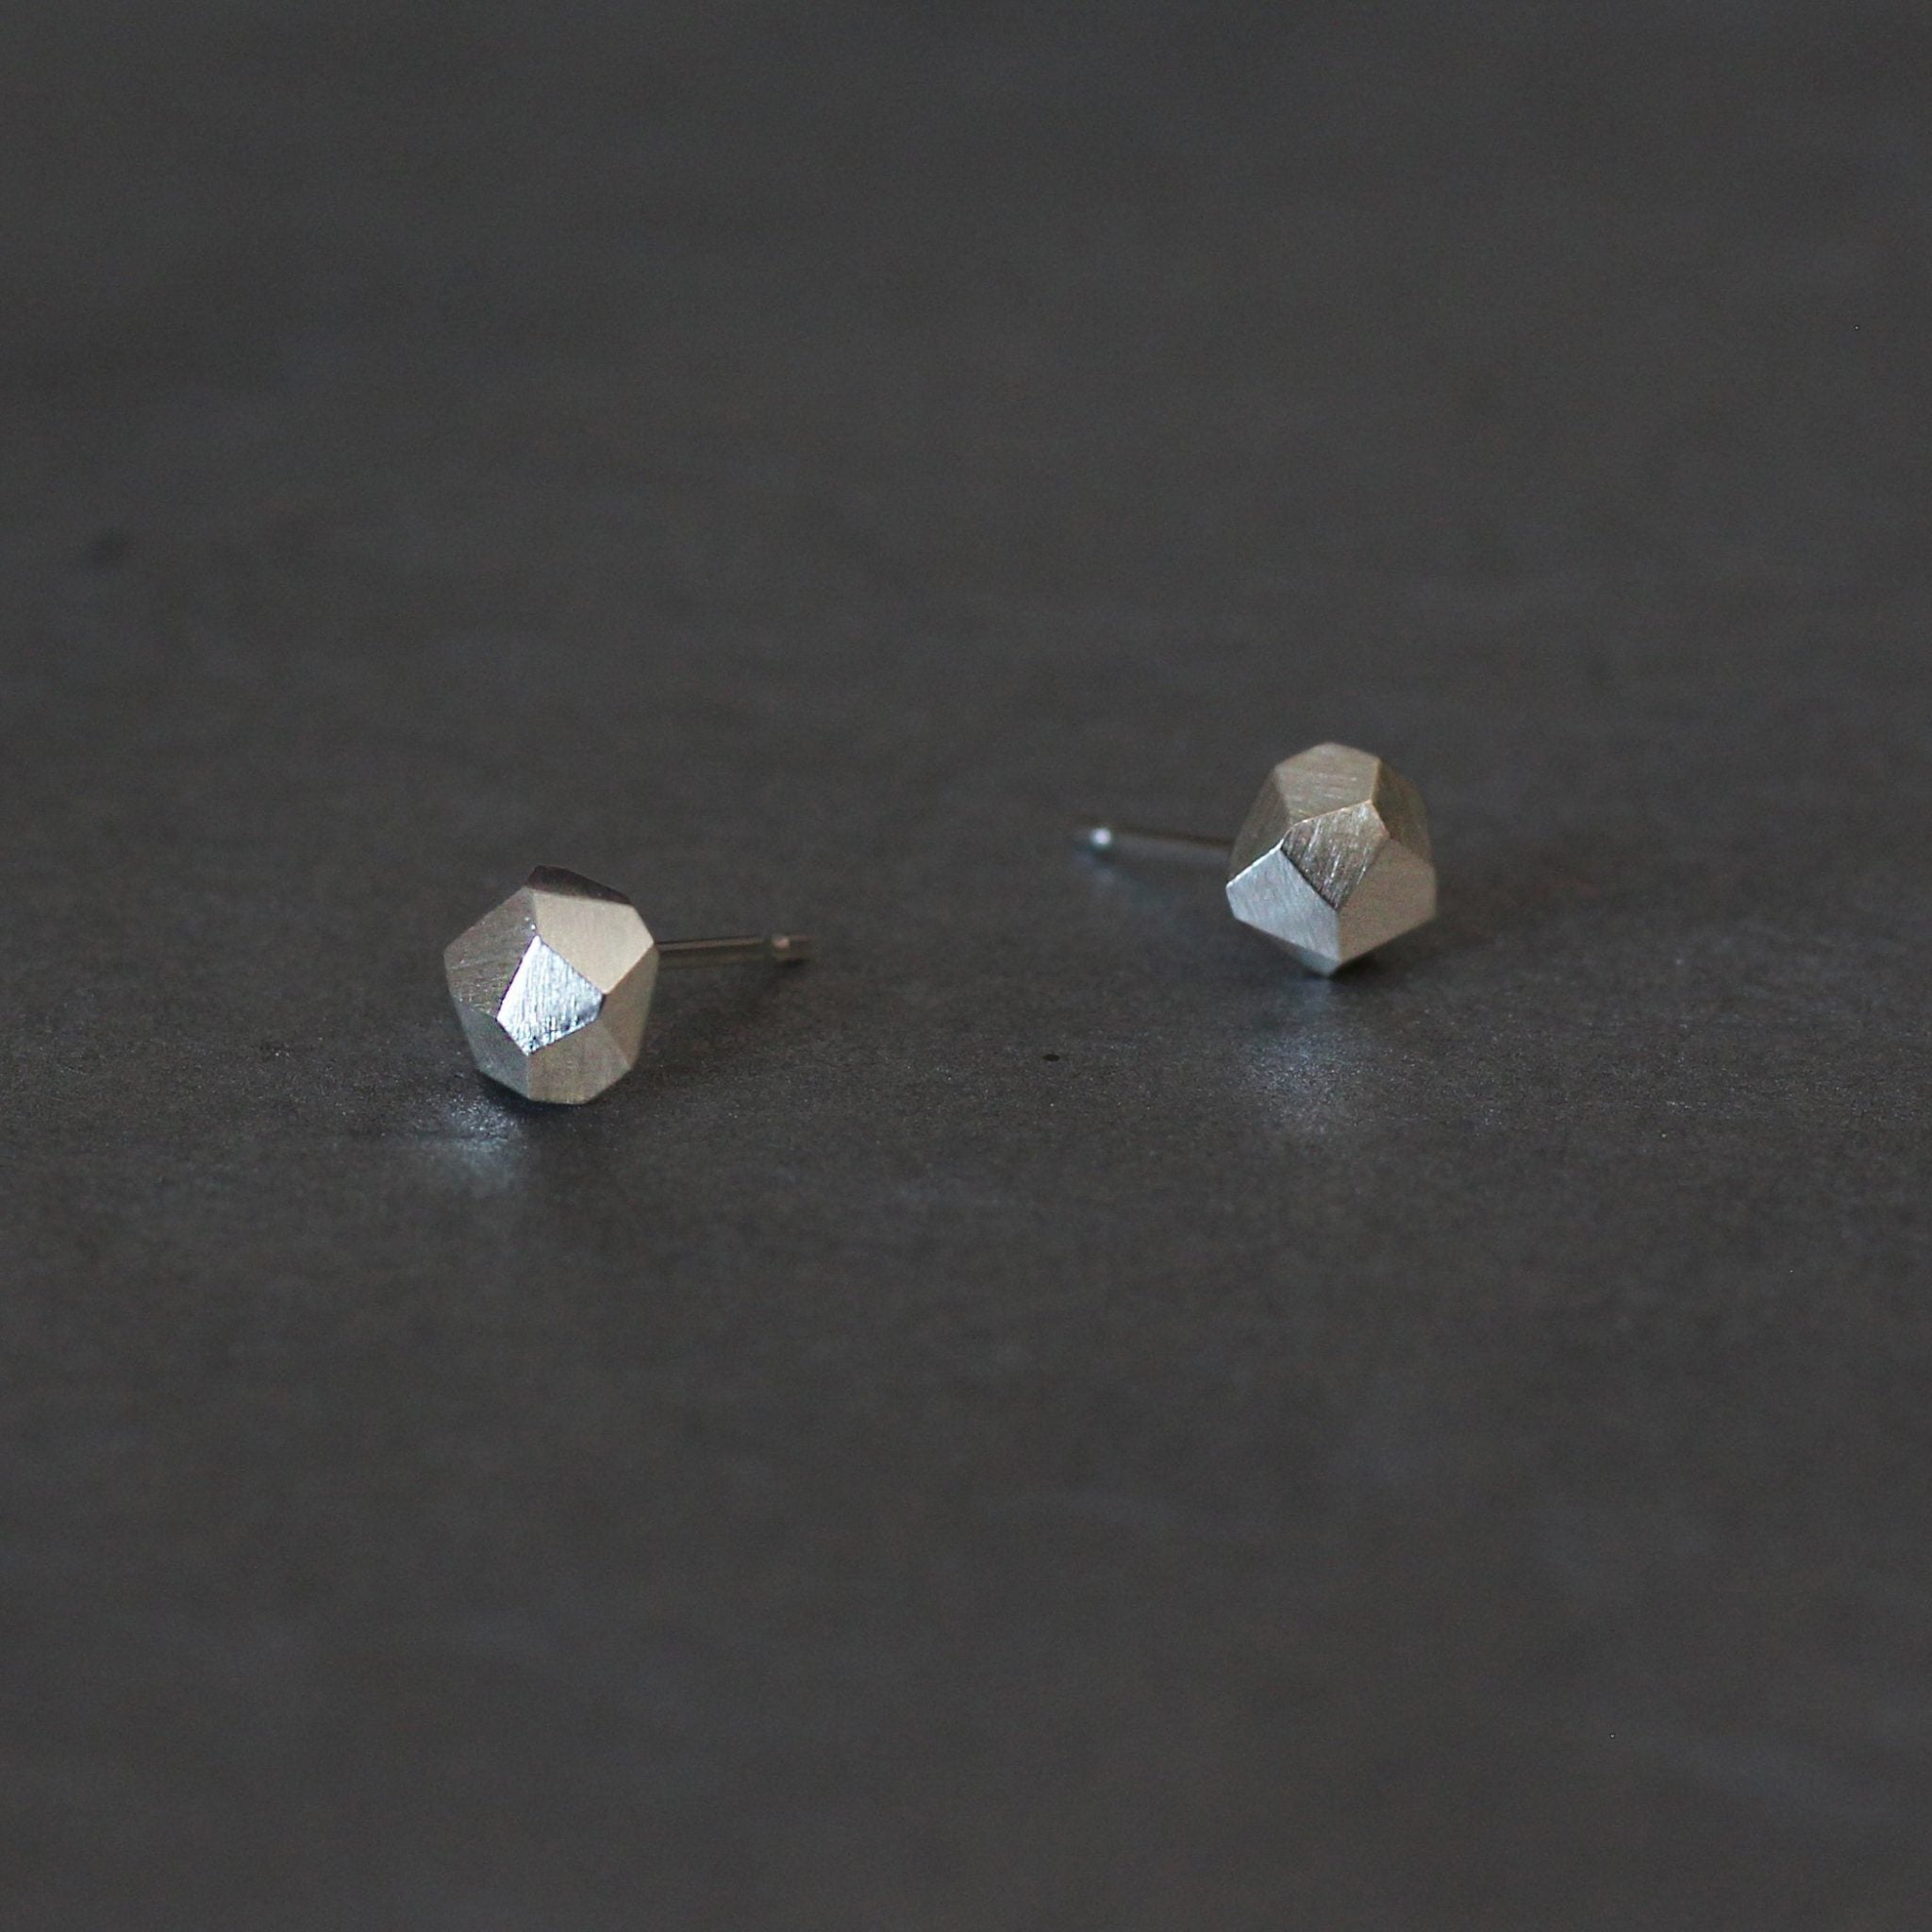 Large Faceted Geometric Stud Earrings,Small Stud Earrings, Handmade sterling silver earrings, Silver Minimalist Tiny Stud Earrings